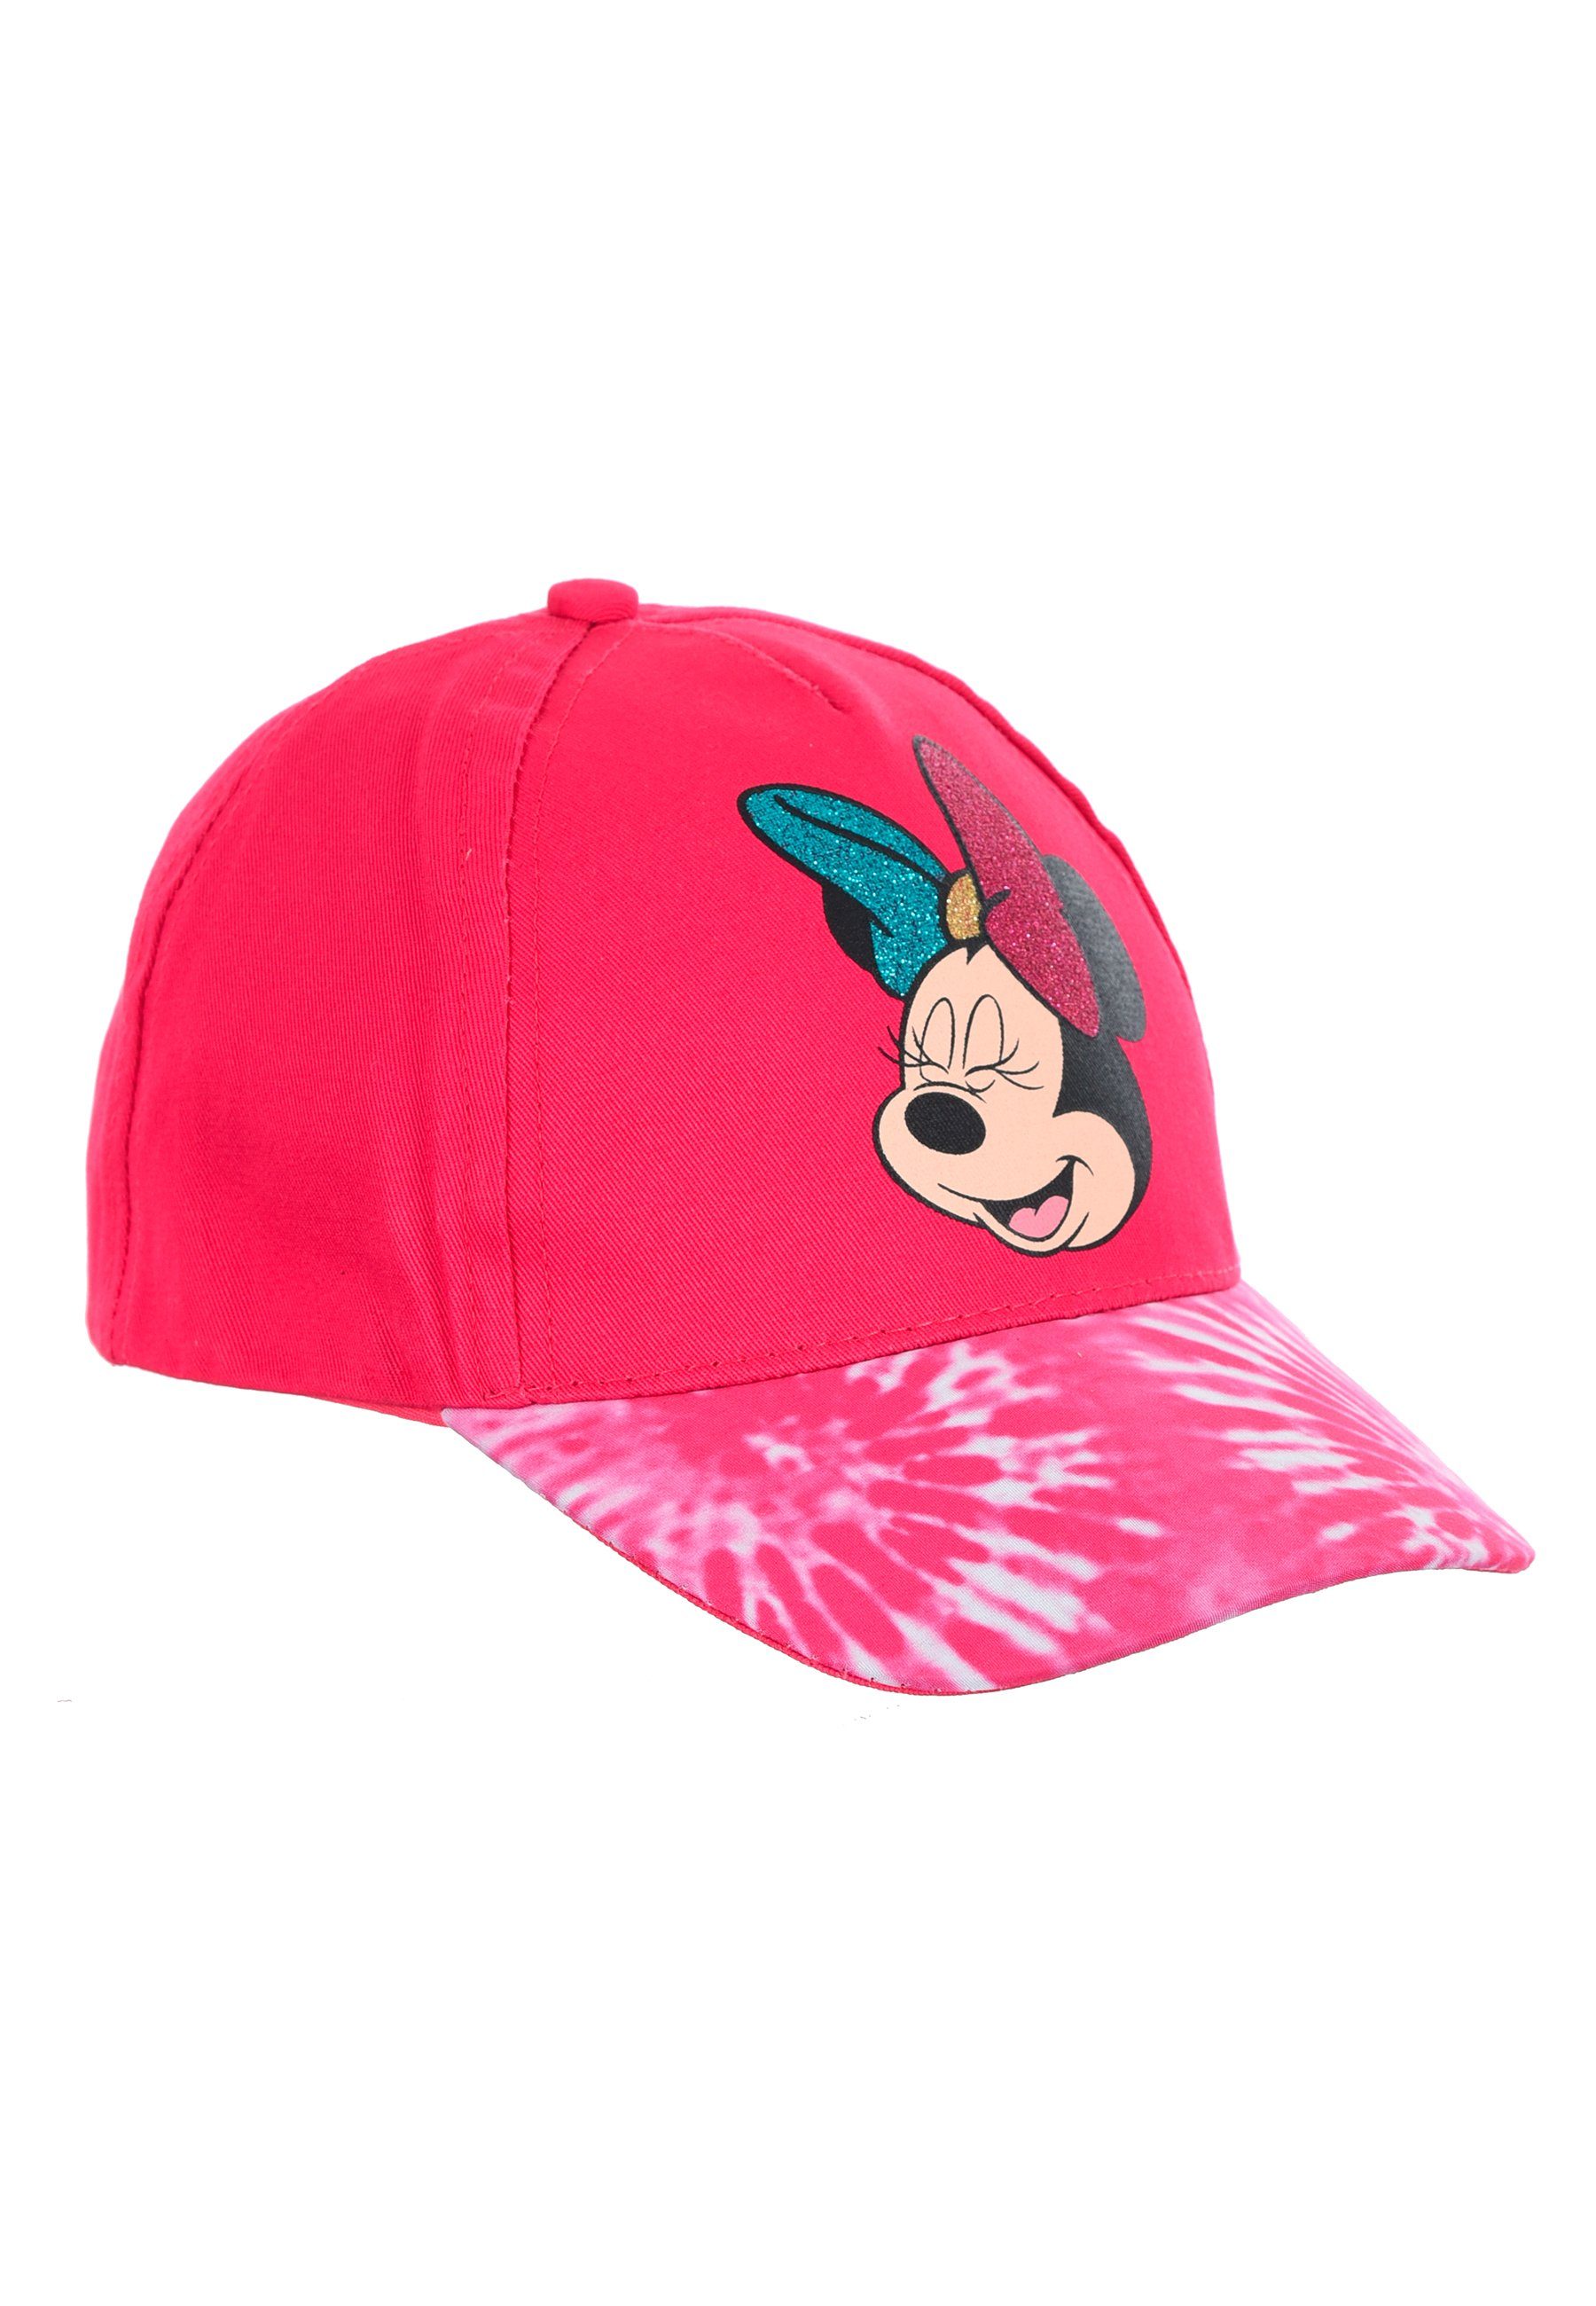 Disney Minnie Mouse Baseball Cap Minnie Kappe Mütze Pink